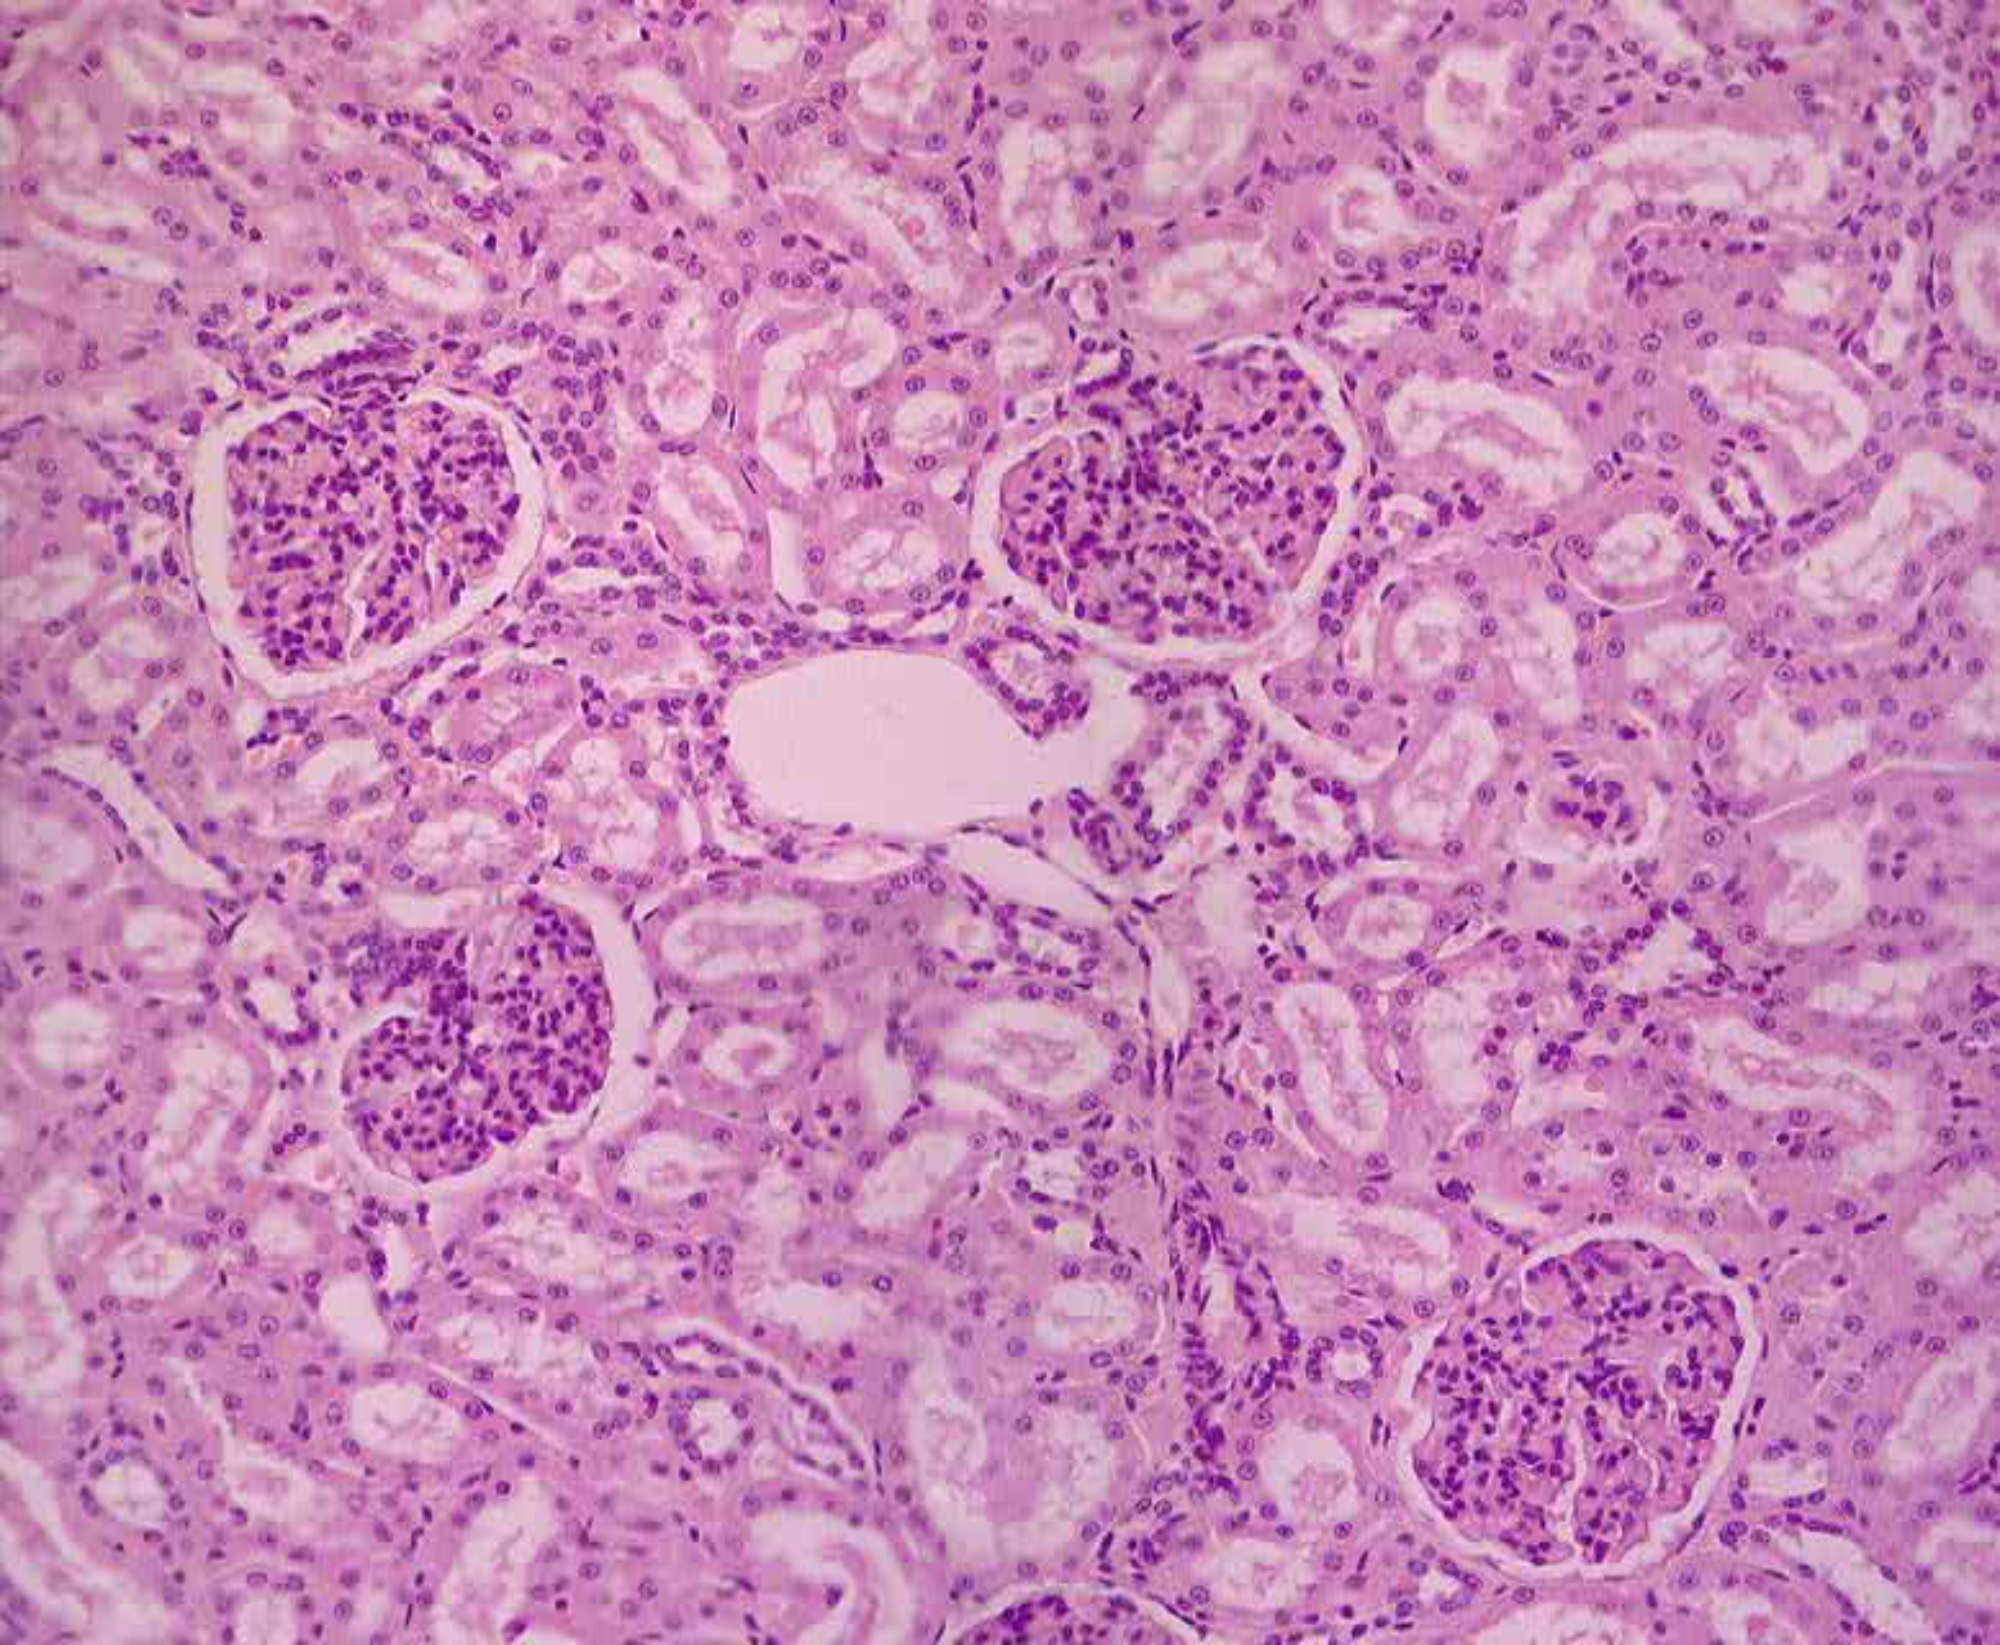 Kidney Medulla Under Microscope